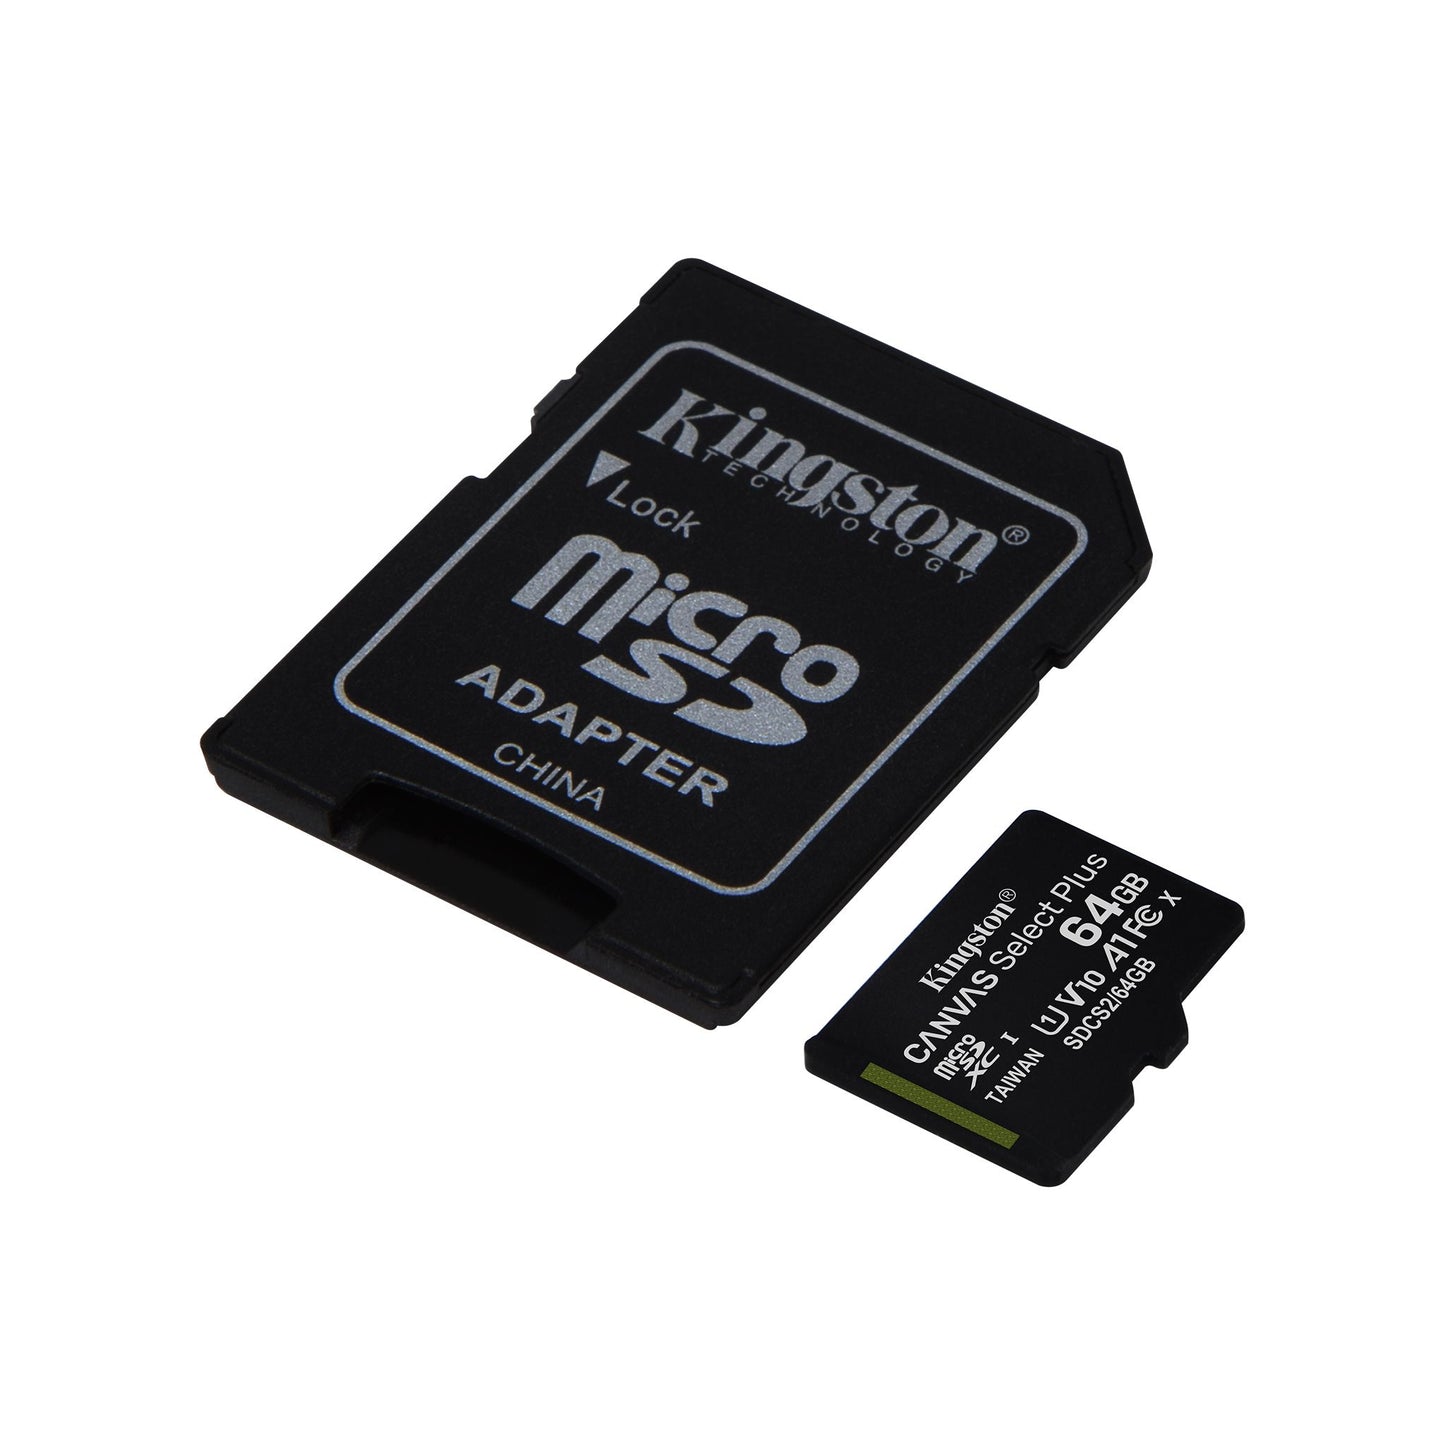 Kingston CANVAS Select Plus 32GB microSDHC Memory Card